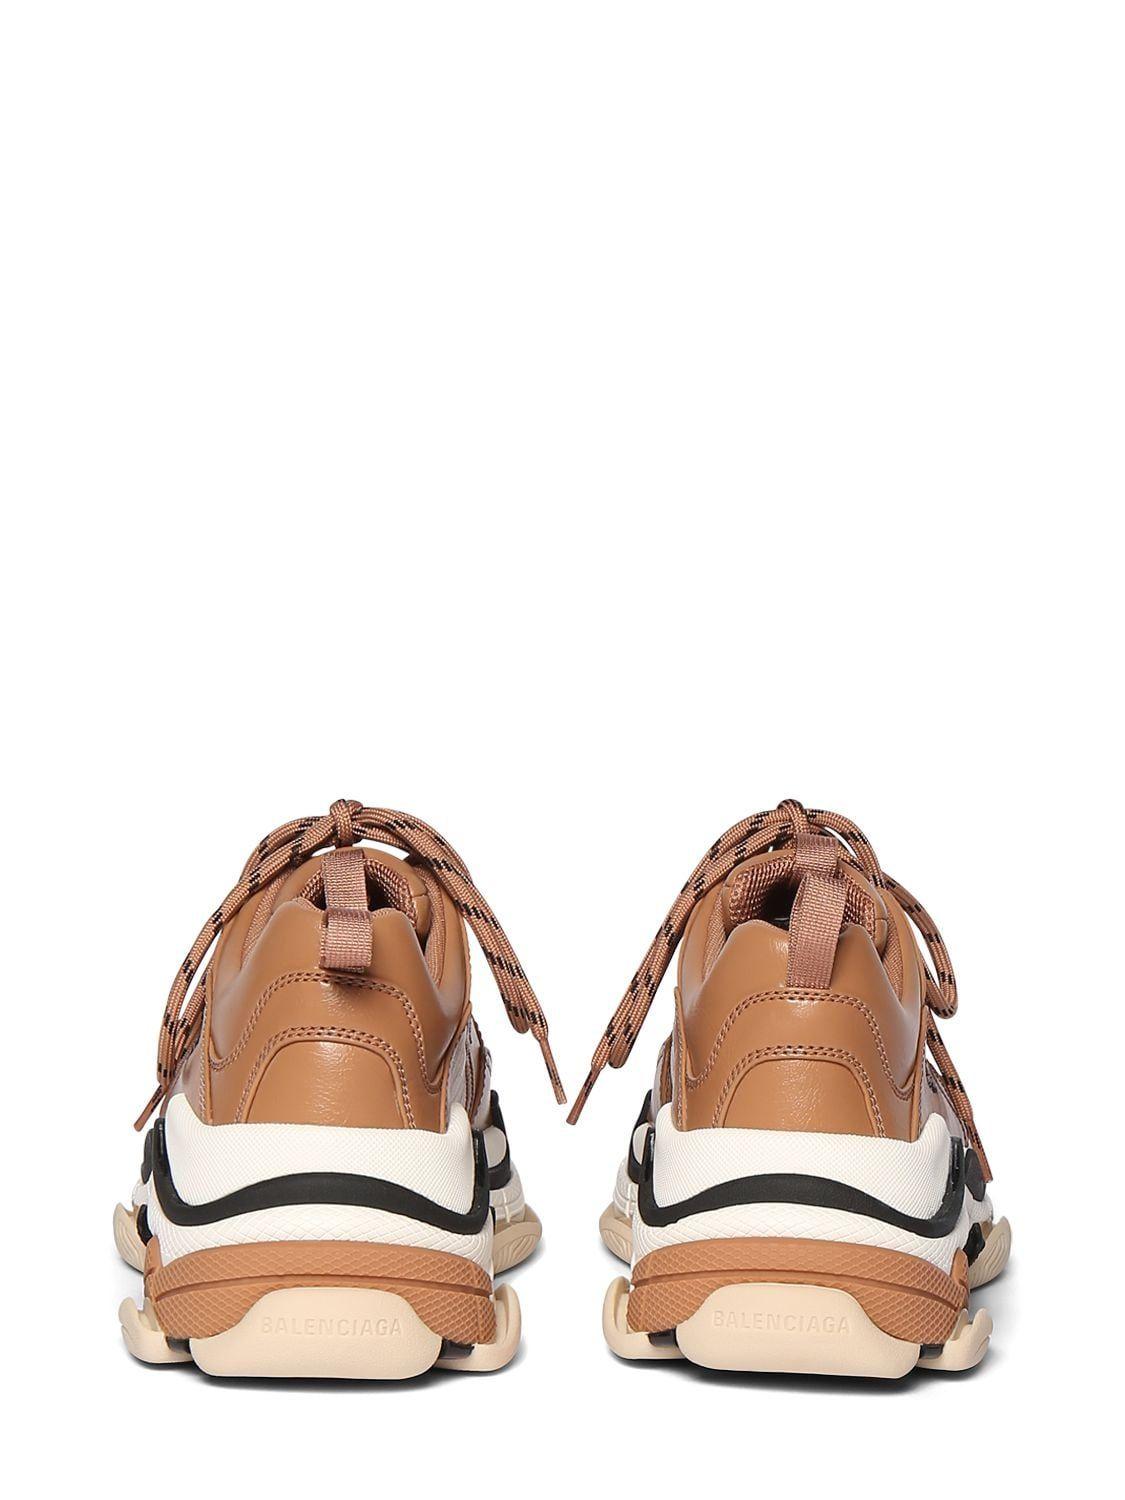 Balenciaga Triple S Sneakers in Brown for Men | Lyst